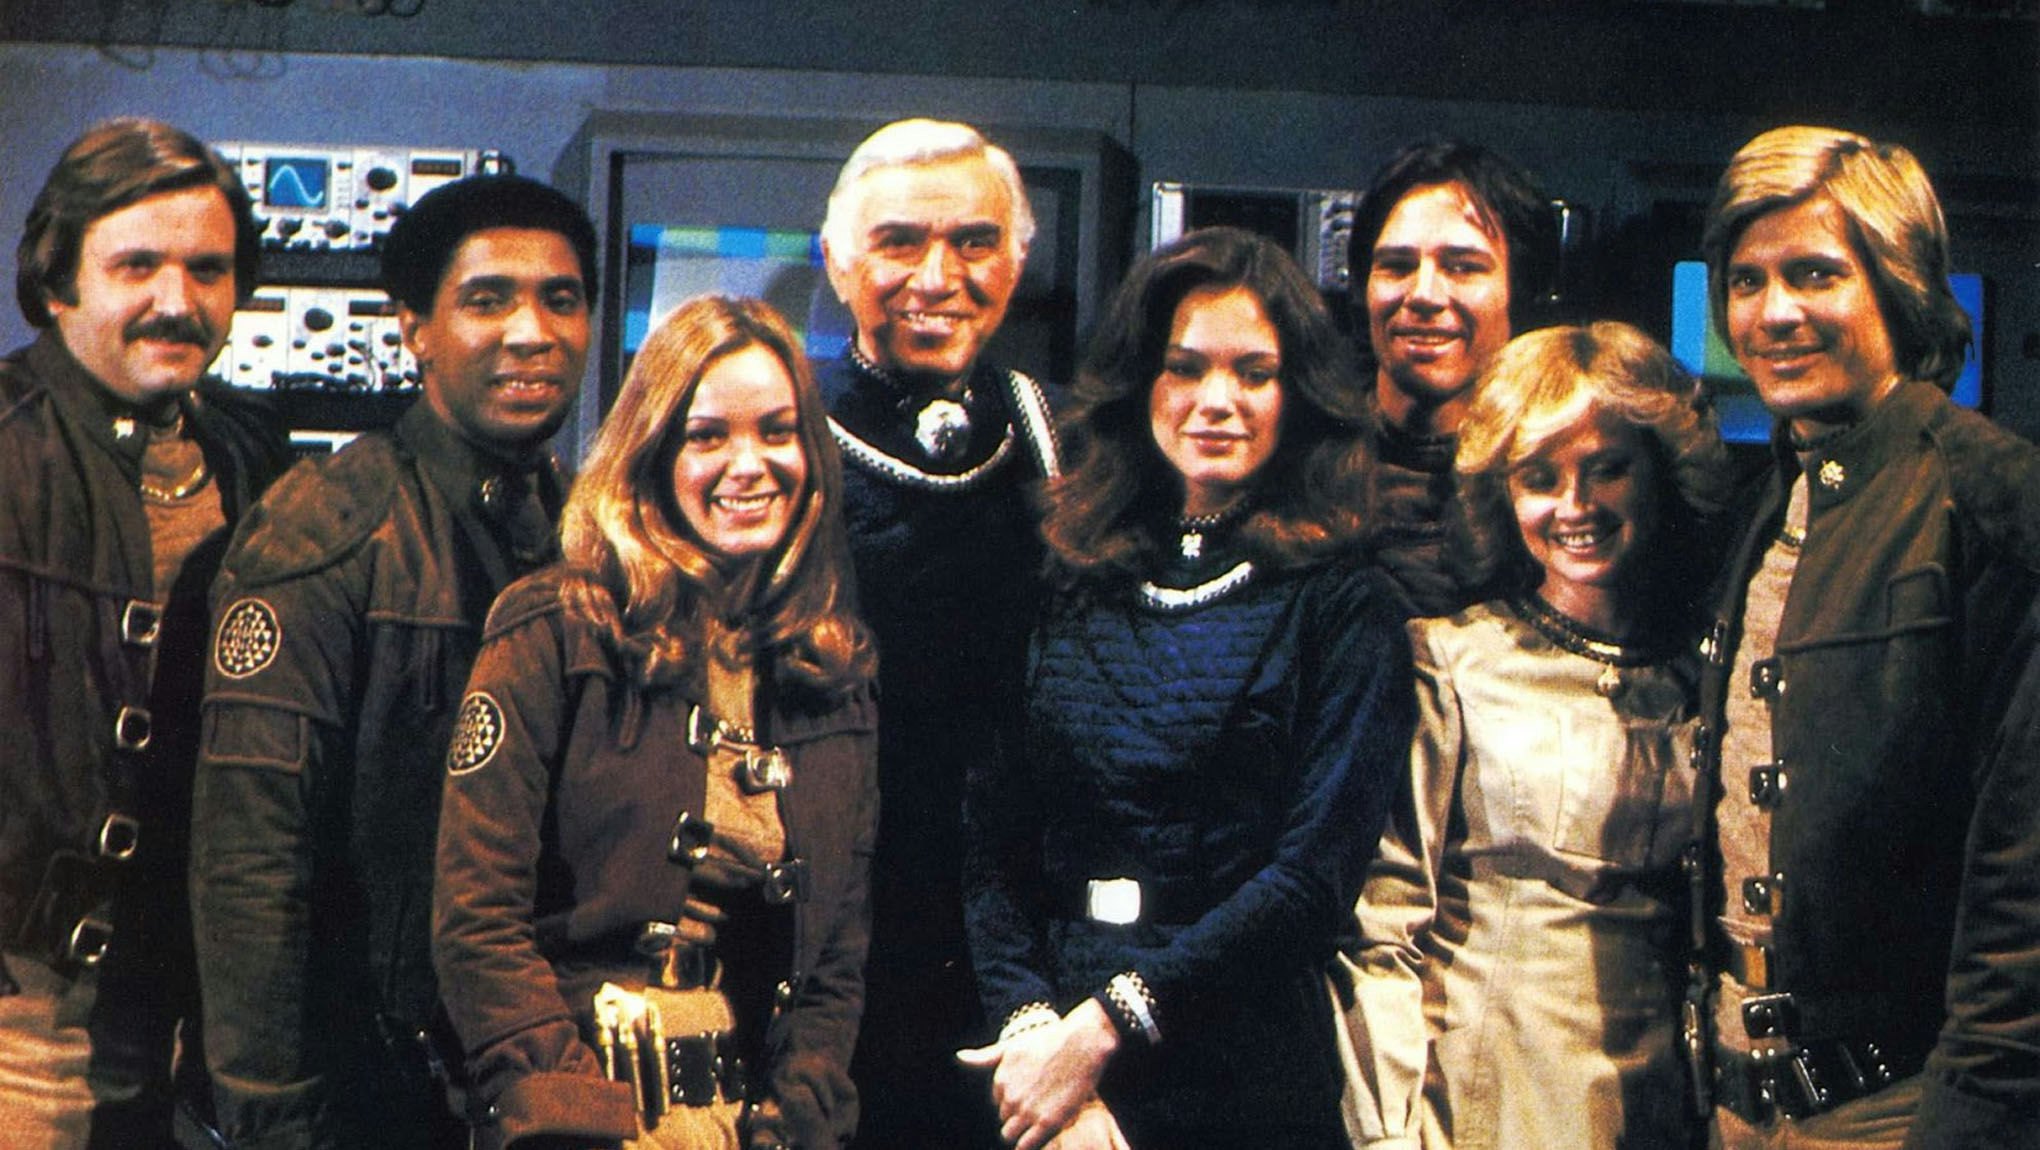 Battlestar Galactica Original 1978 TV Series Cast Poster NEW UNUSED ROLLED